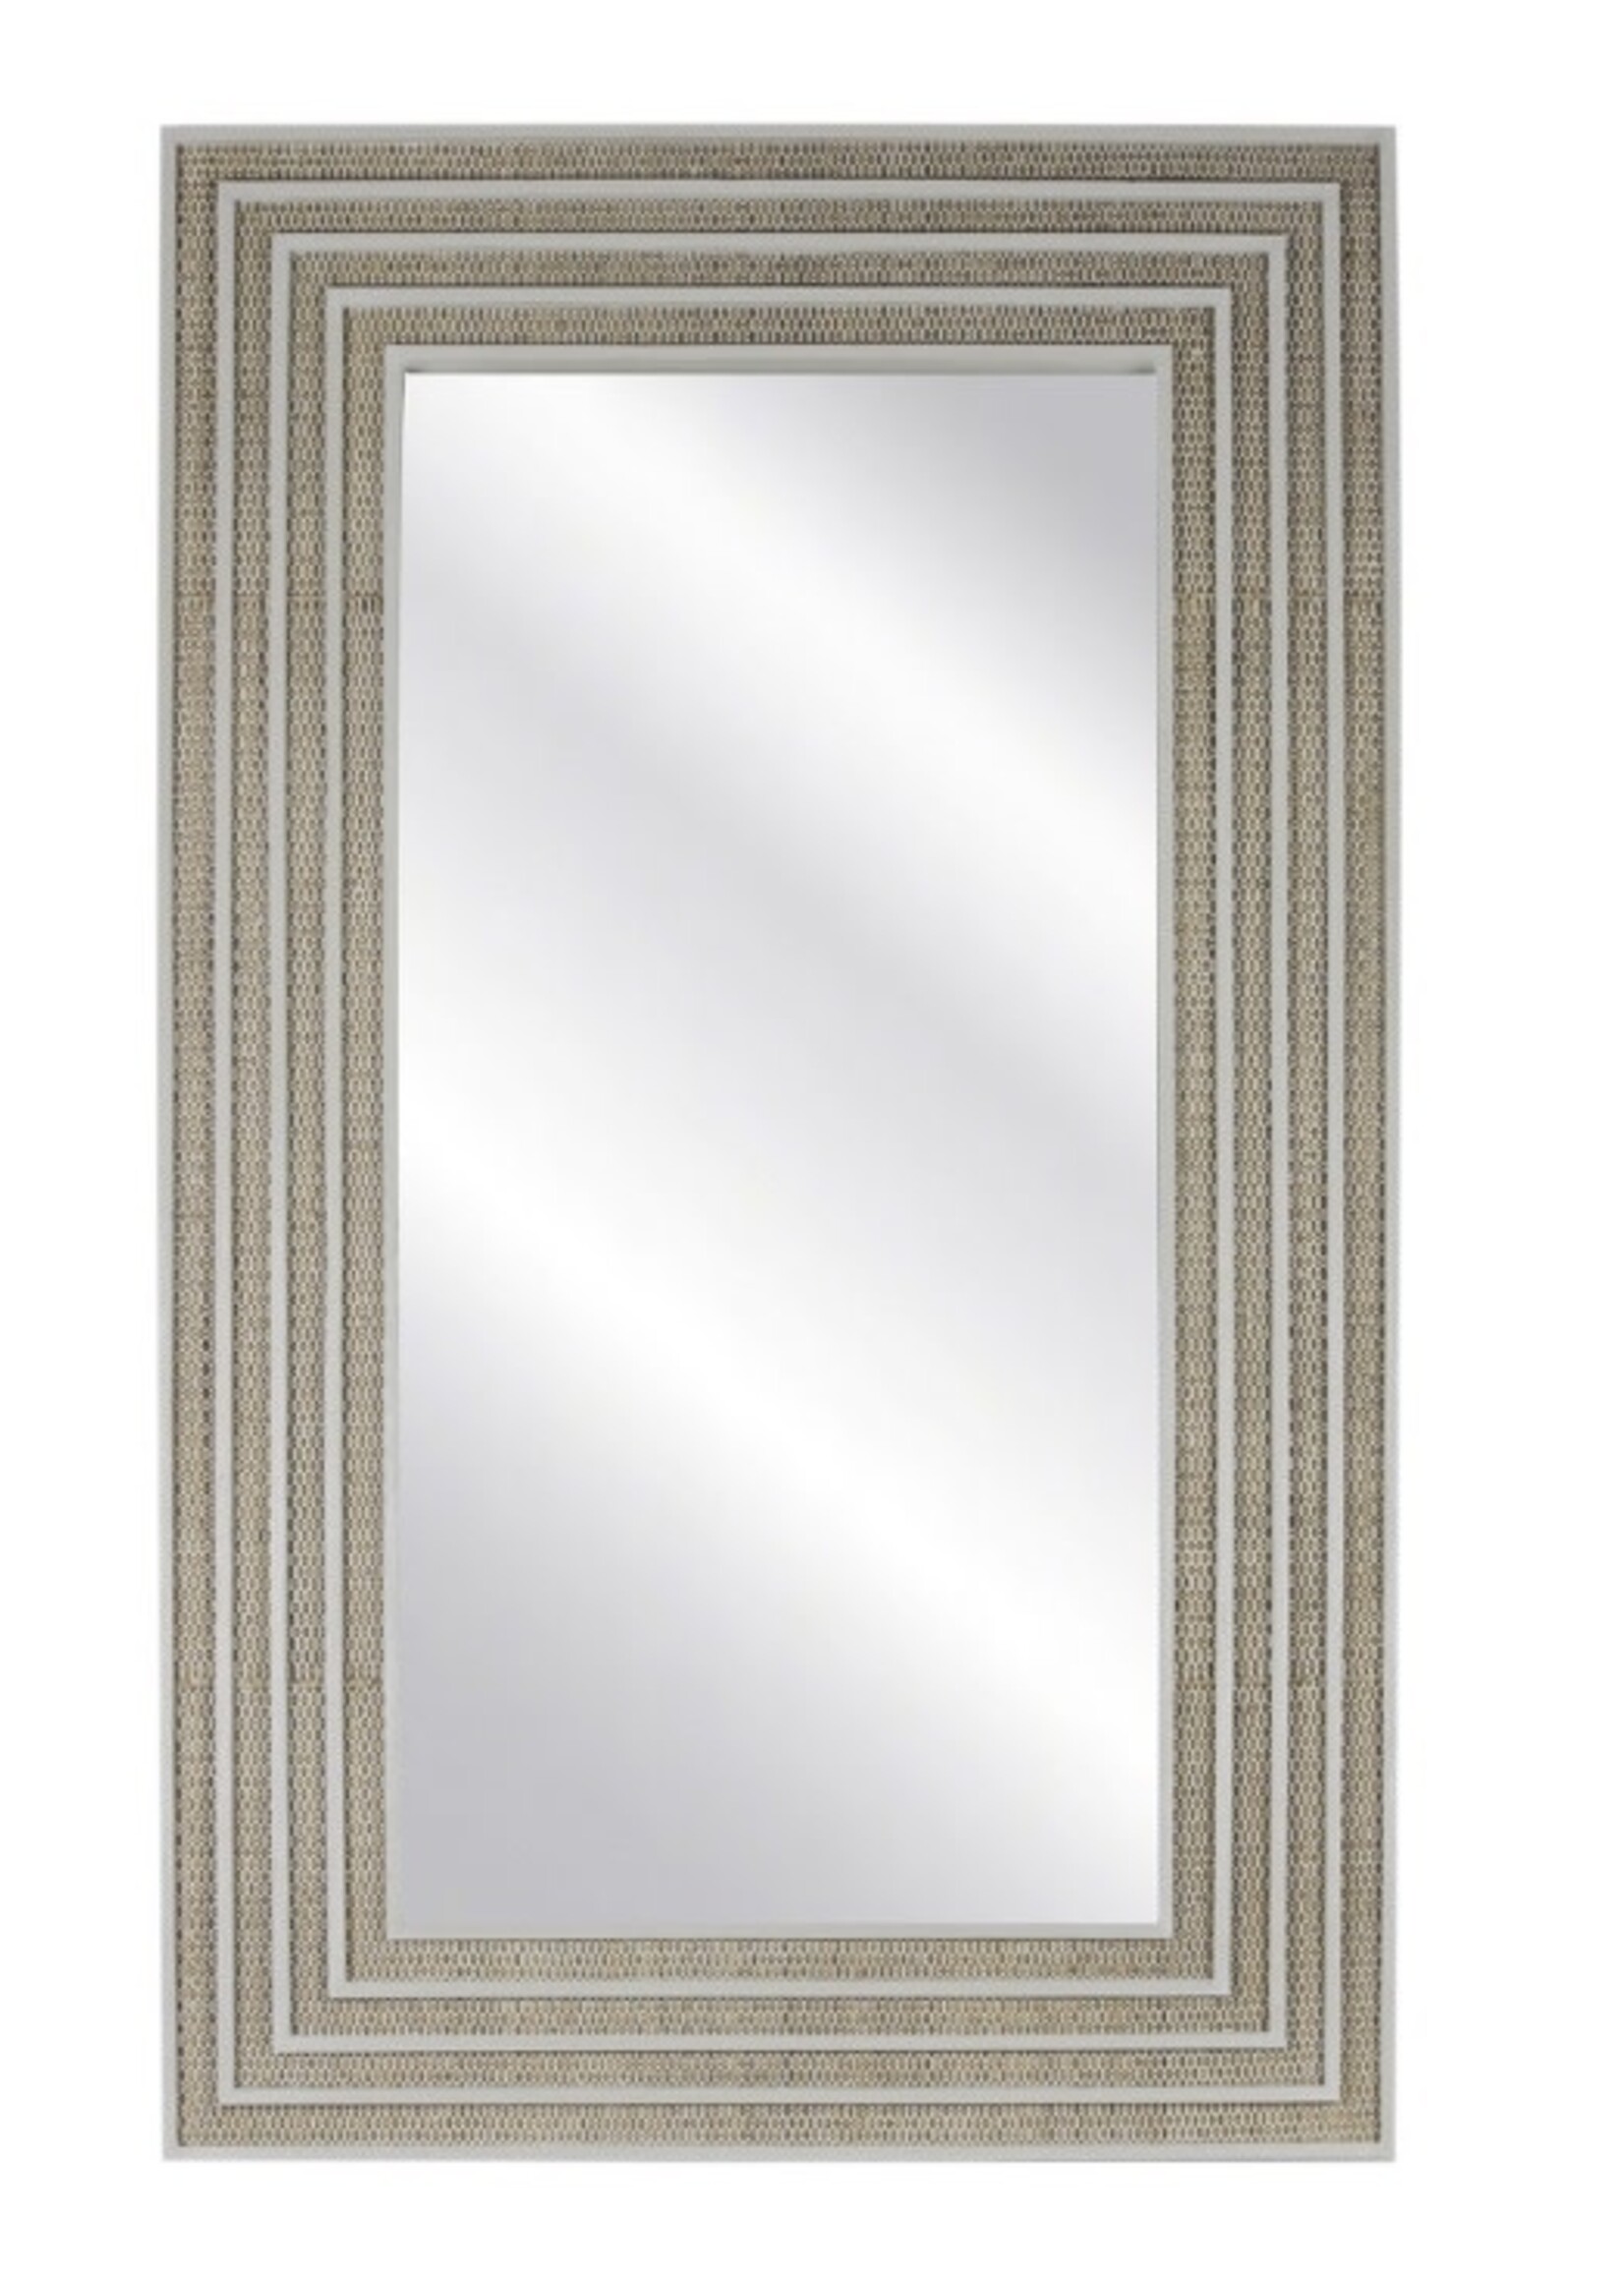 Rectangular Mirror With Rattan Inset 35x1.5x59